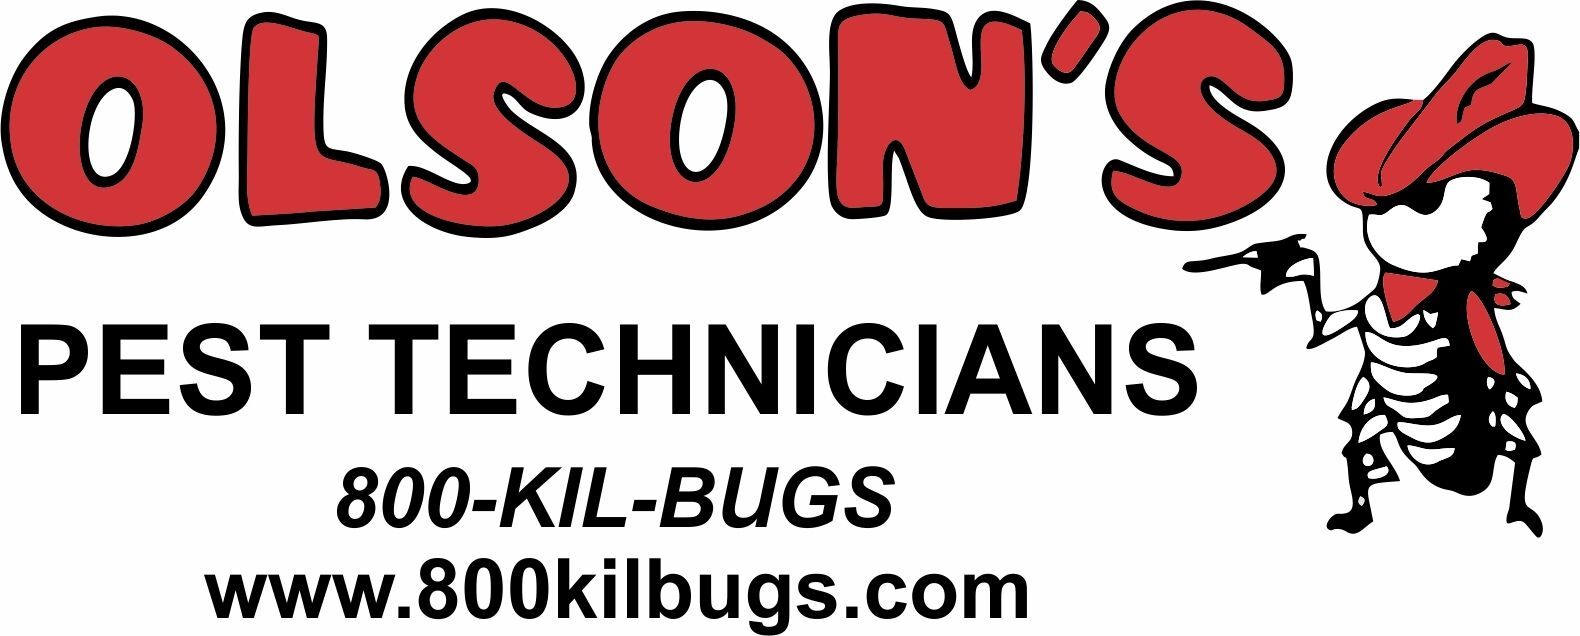 Olson's Pest Technician